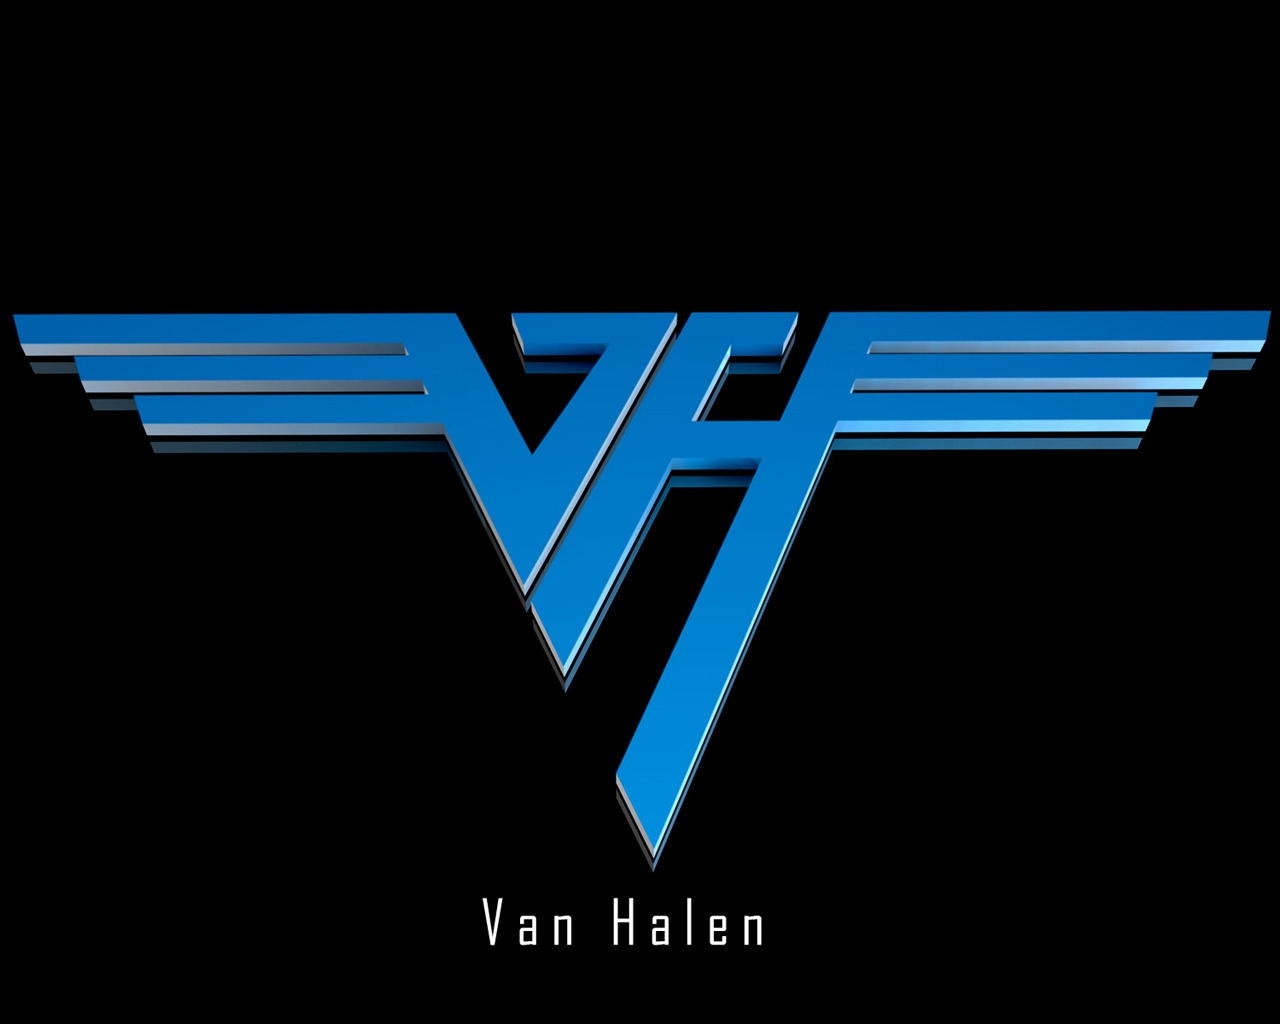 The Van Halen Logo for 1280 x 1024 resolution